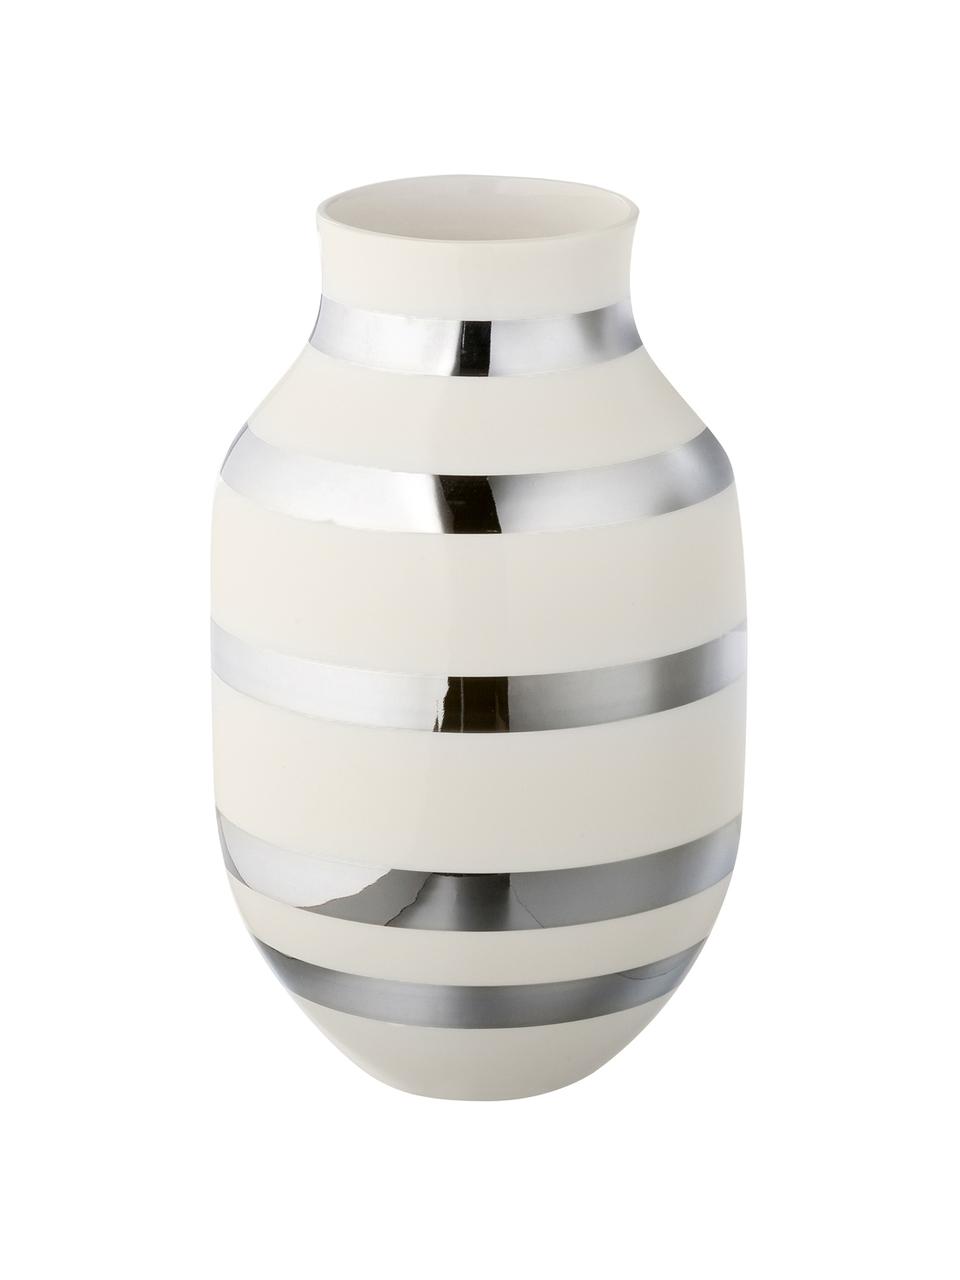 Grand vase design fait main Omaggio, Couleur argentée, brillant, blanc